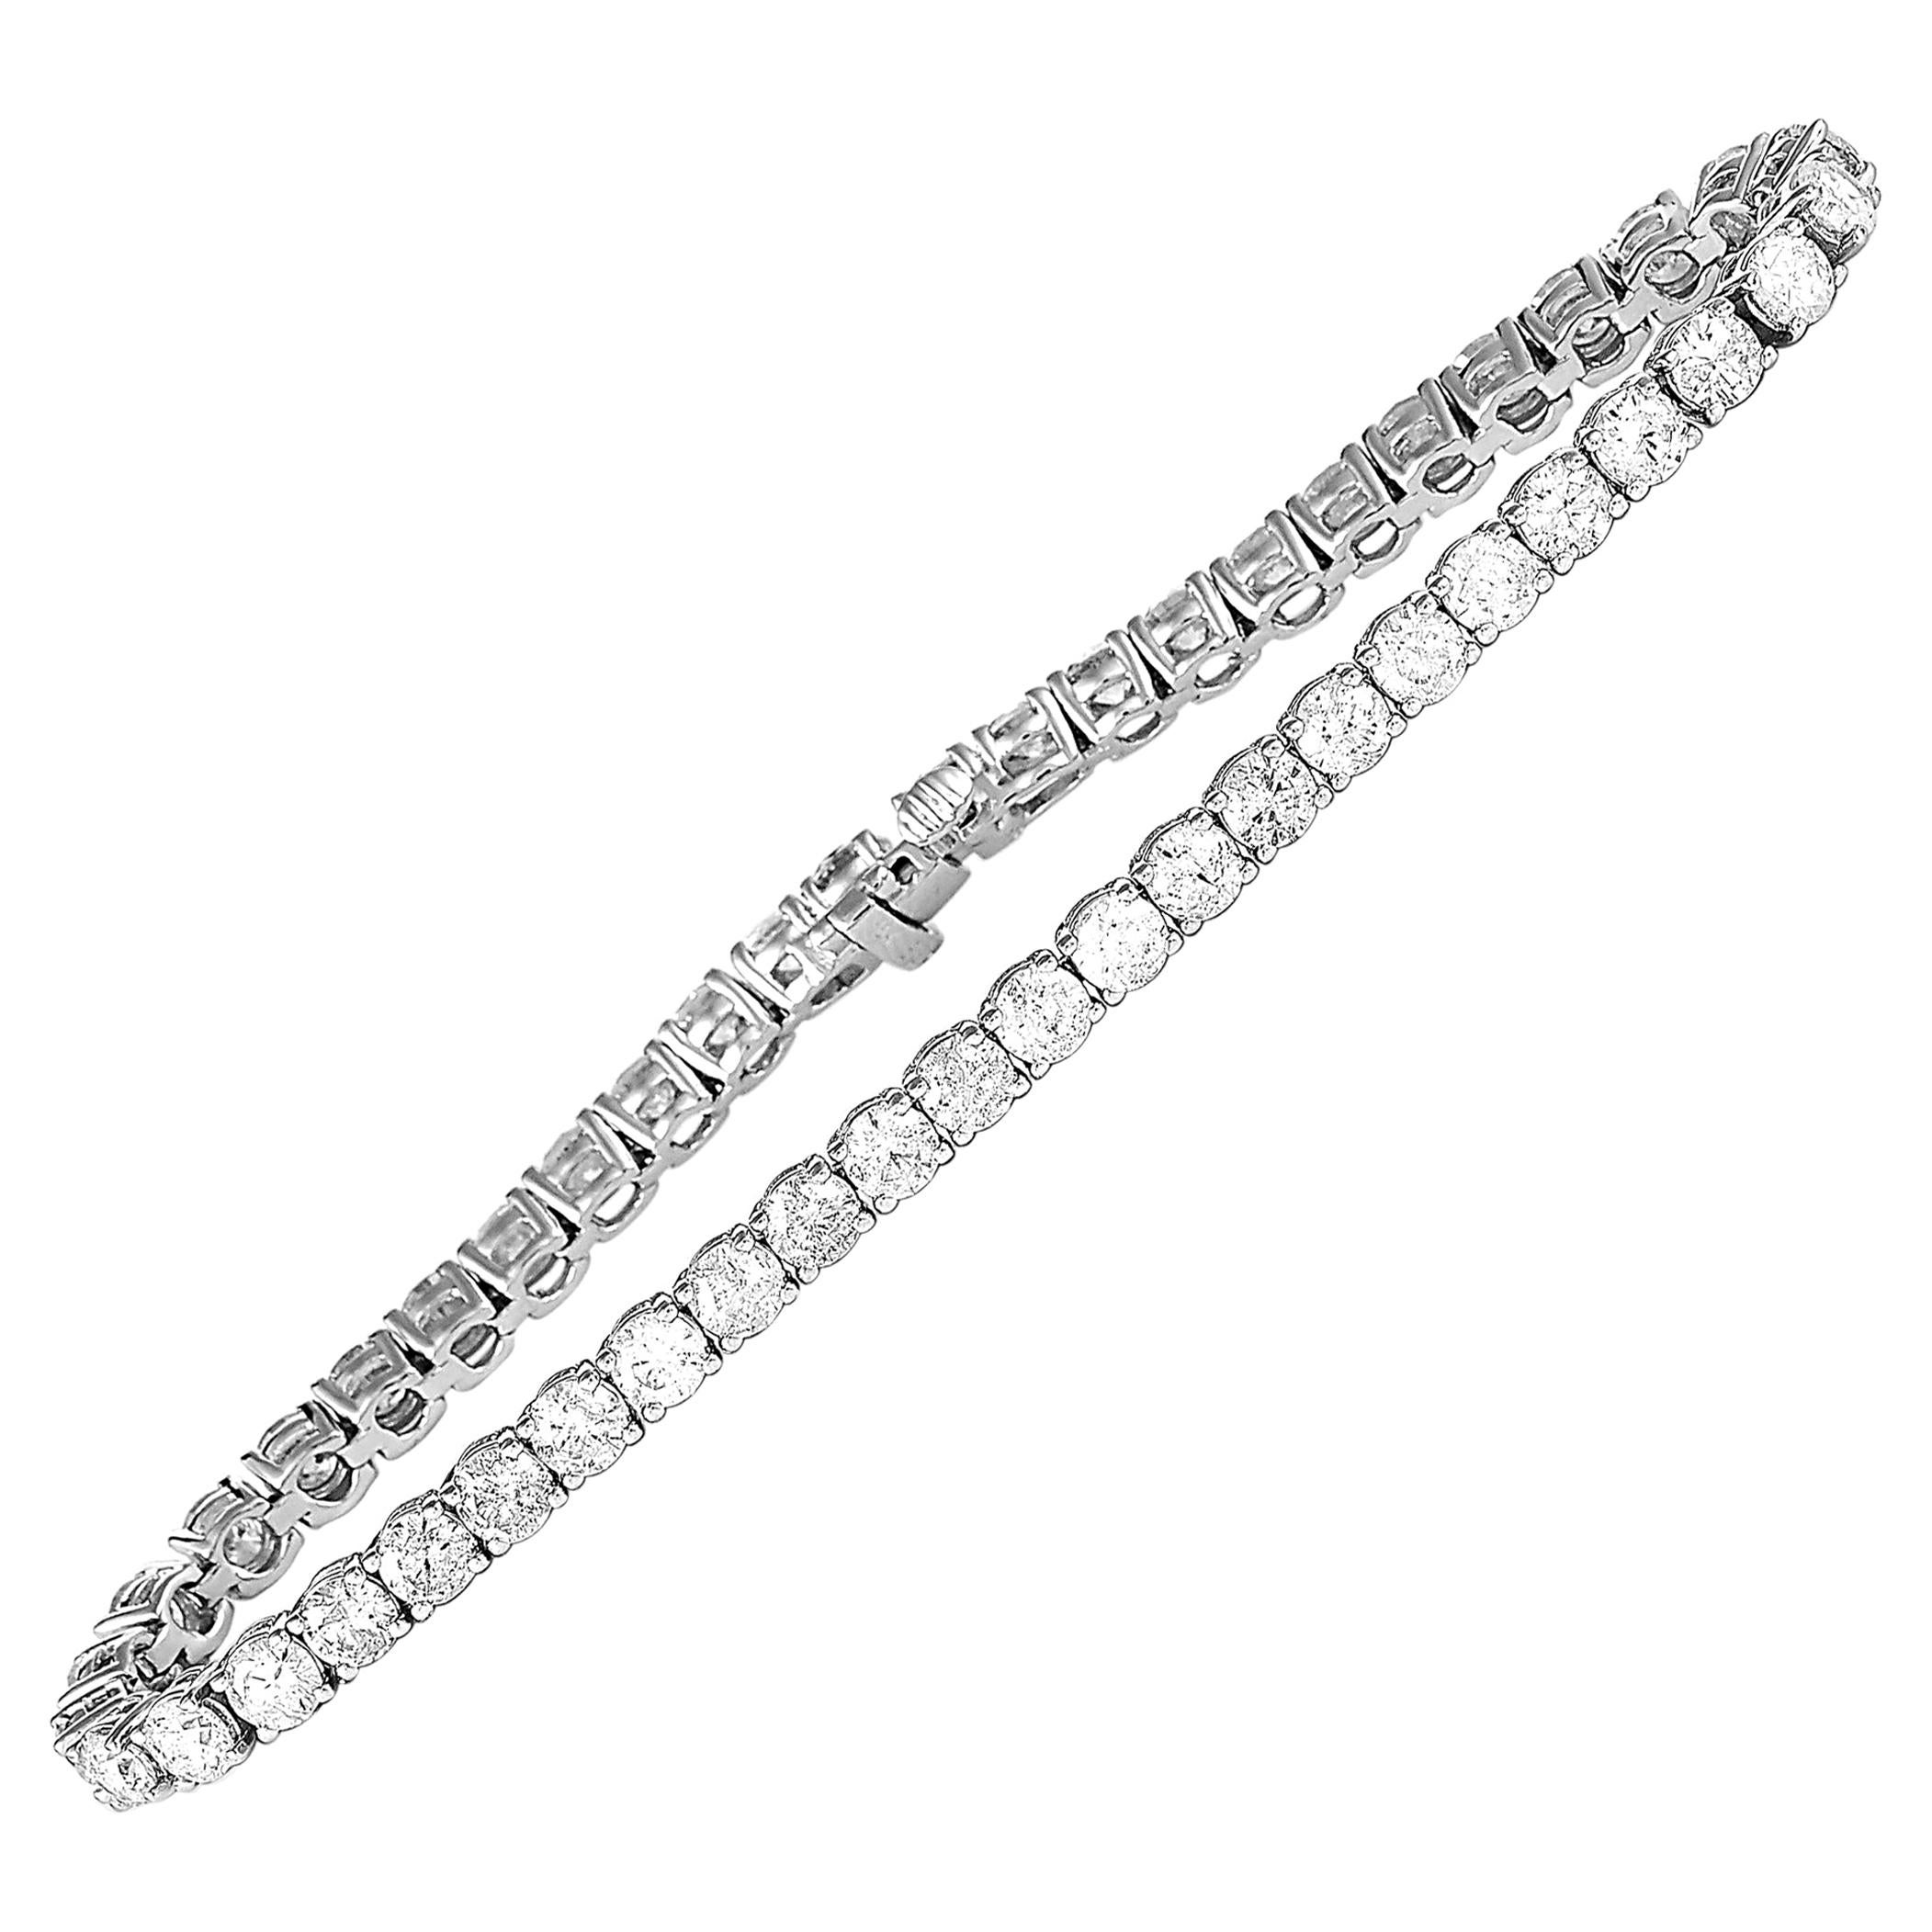 LB Exclusive 14 Karat White Gold 9.29 Carat Diamond Tennis Bracelet